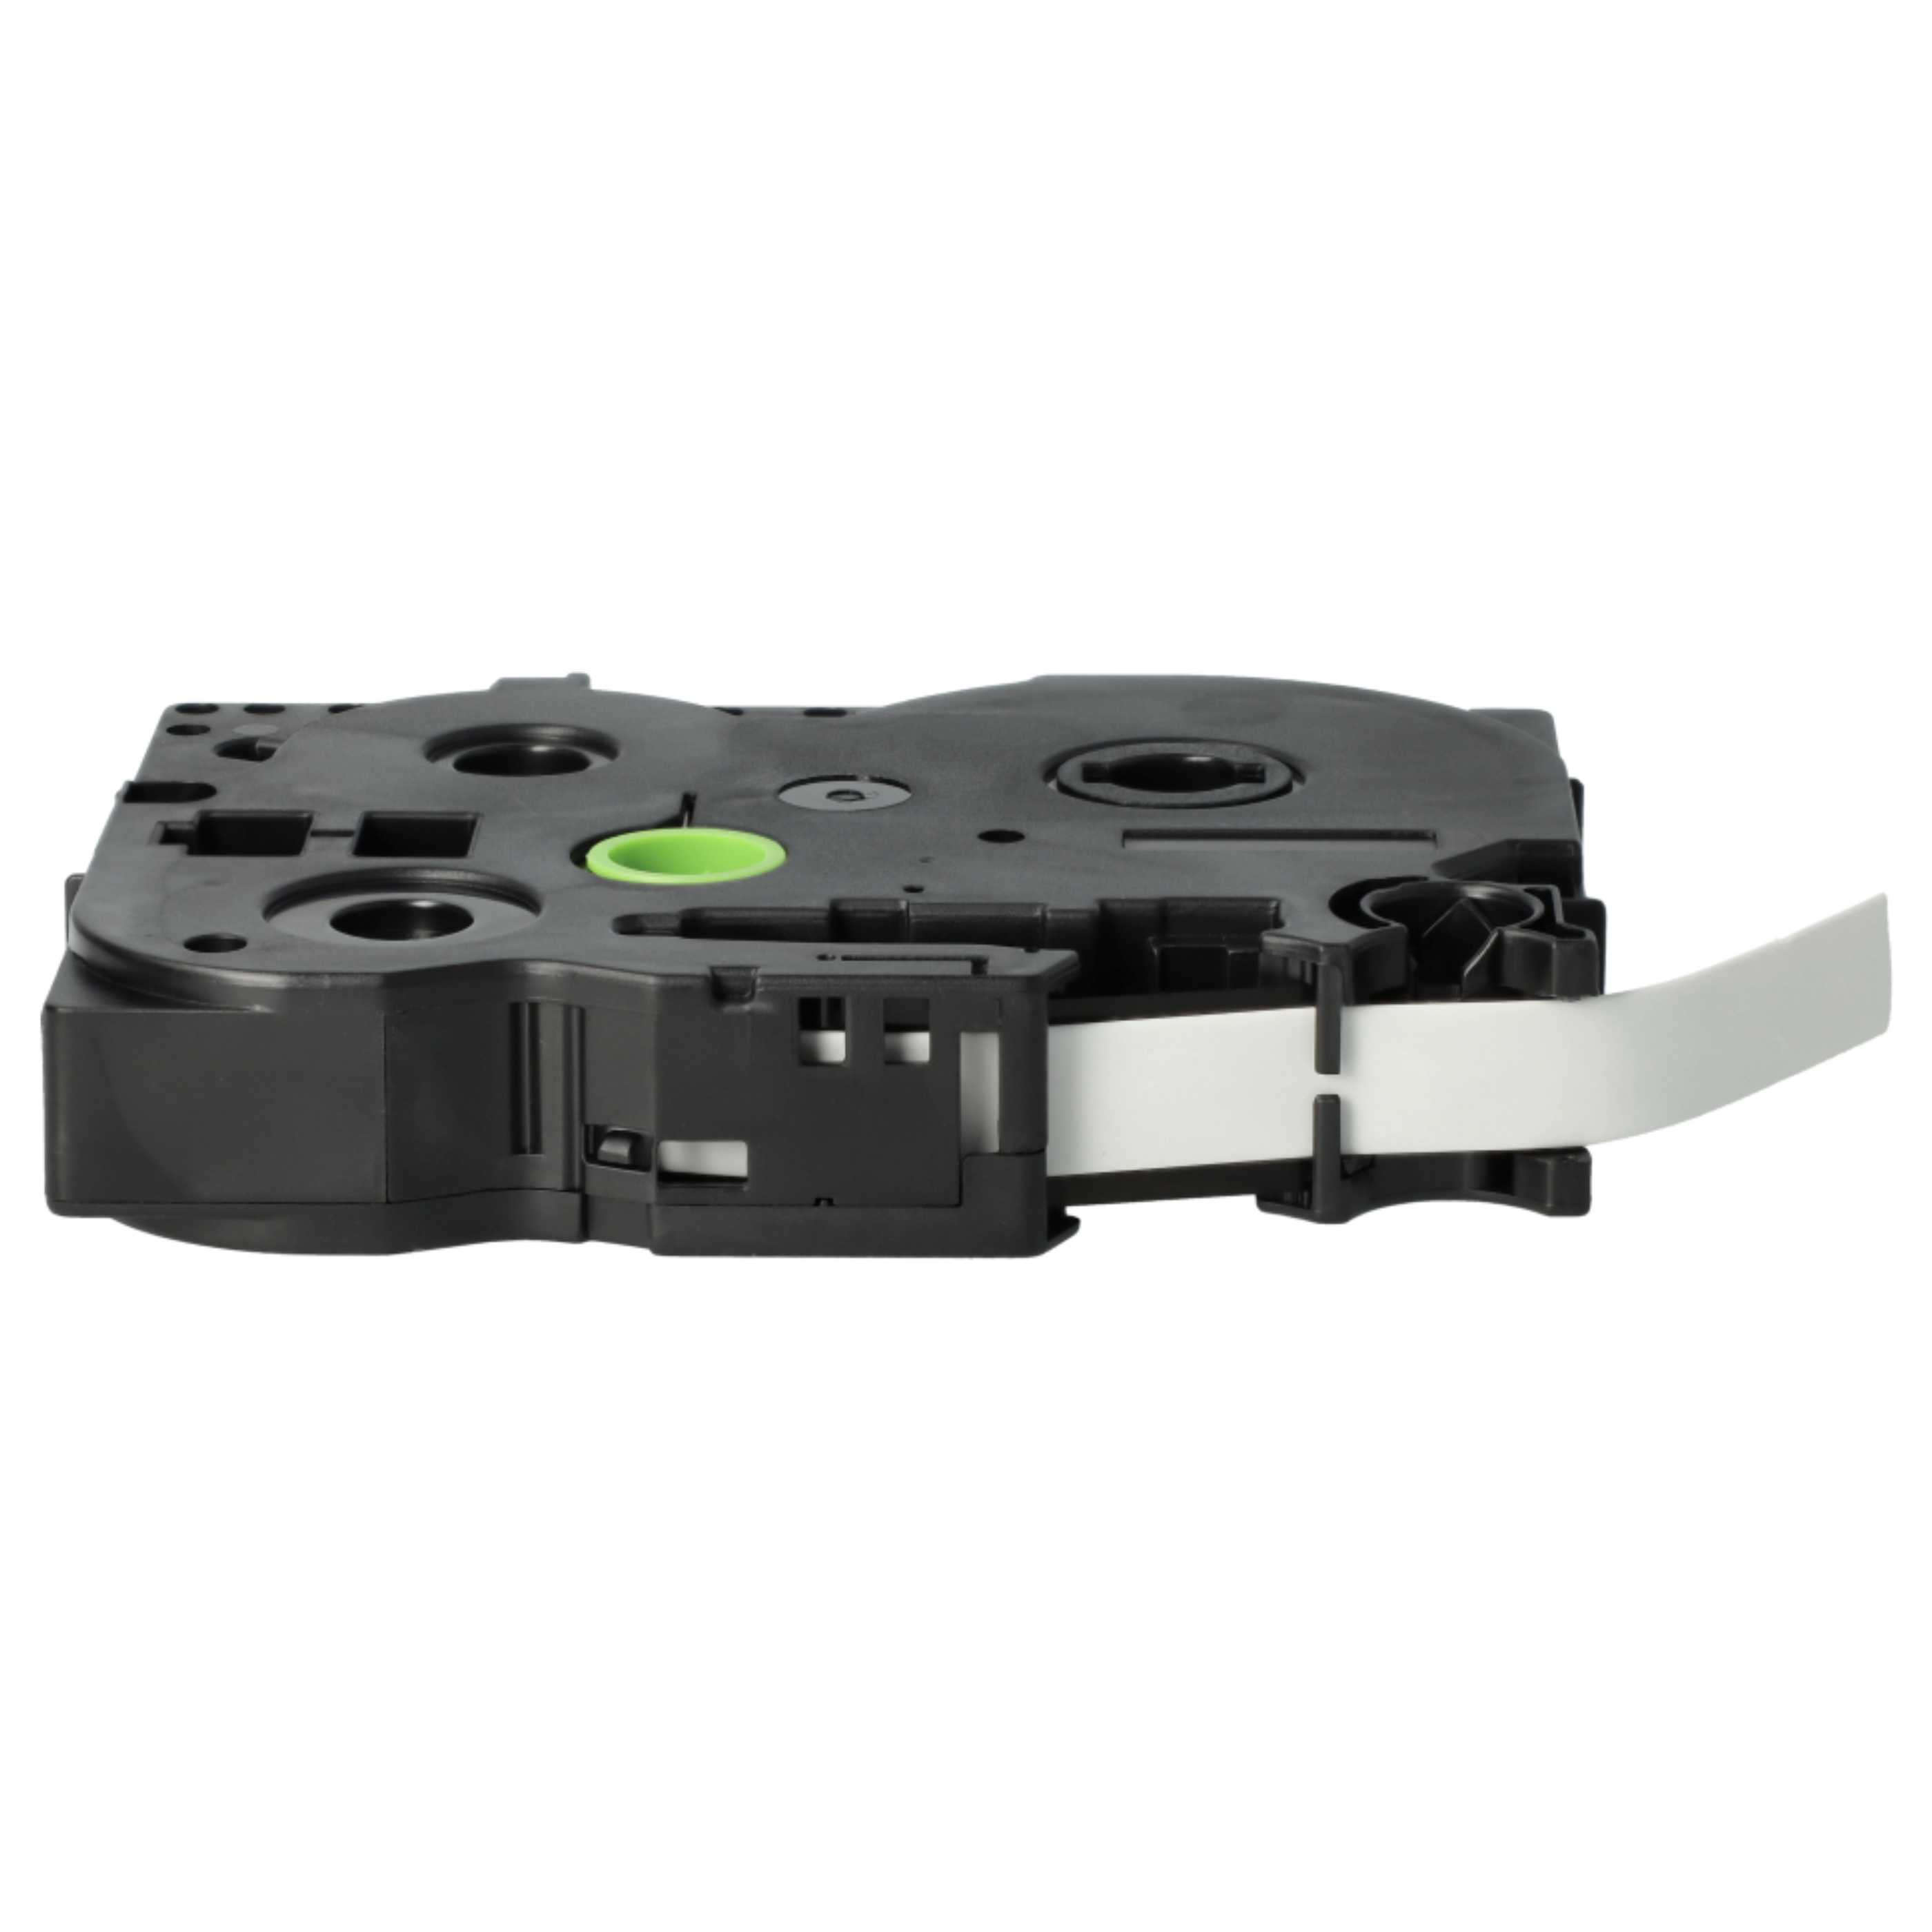 Cassetta tubi termorestringenti sostituisce Brother AHS-221 per etichettatrice Brother 8,8mm nero su bianco